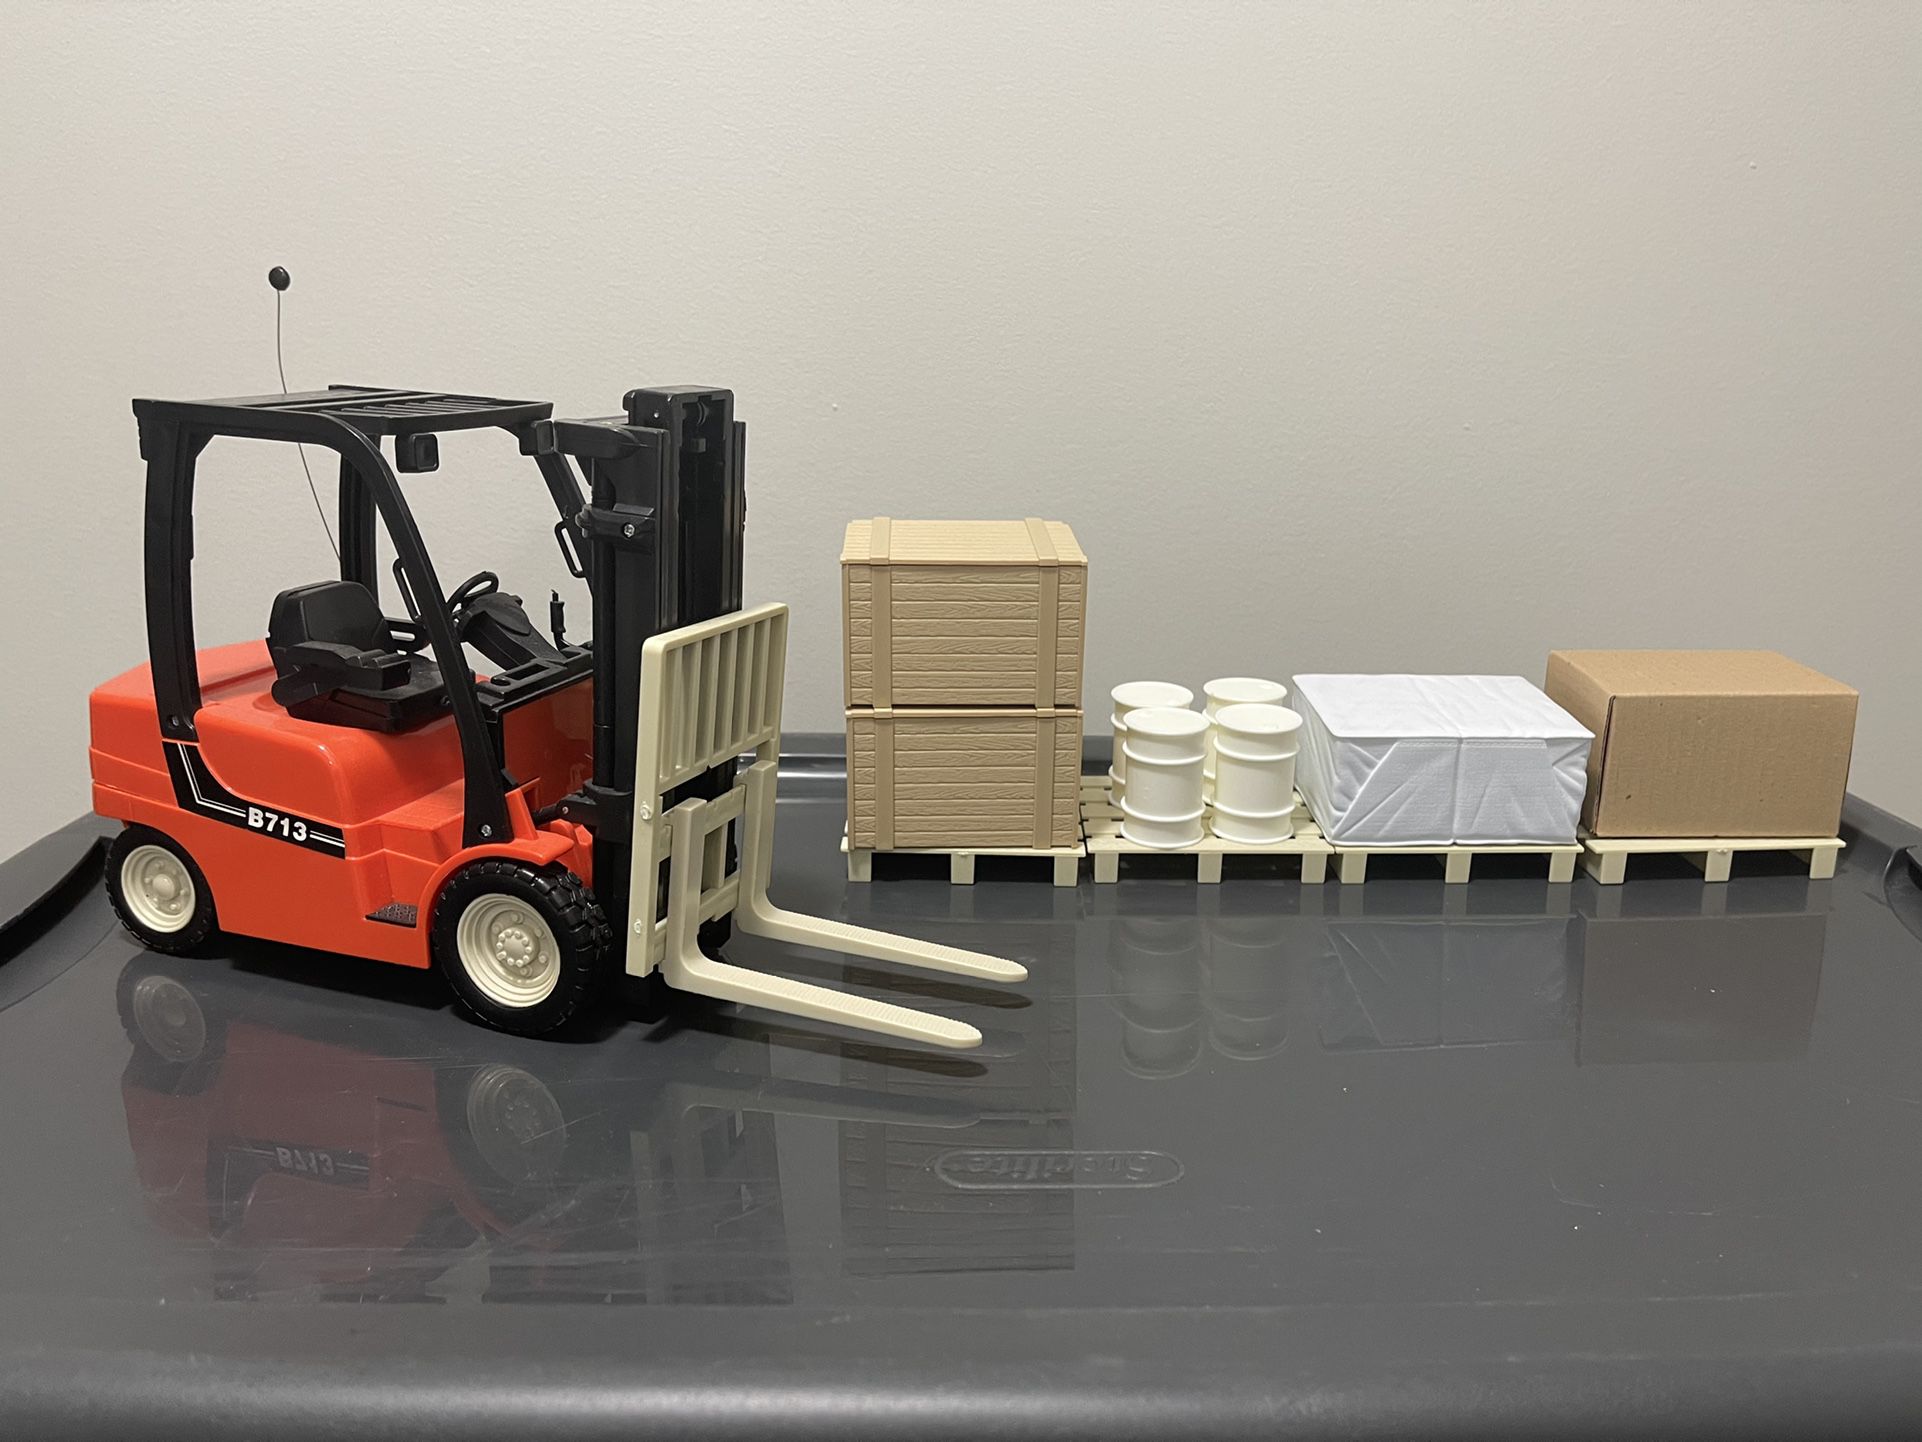 Miniature Forklift